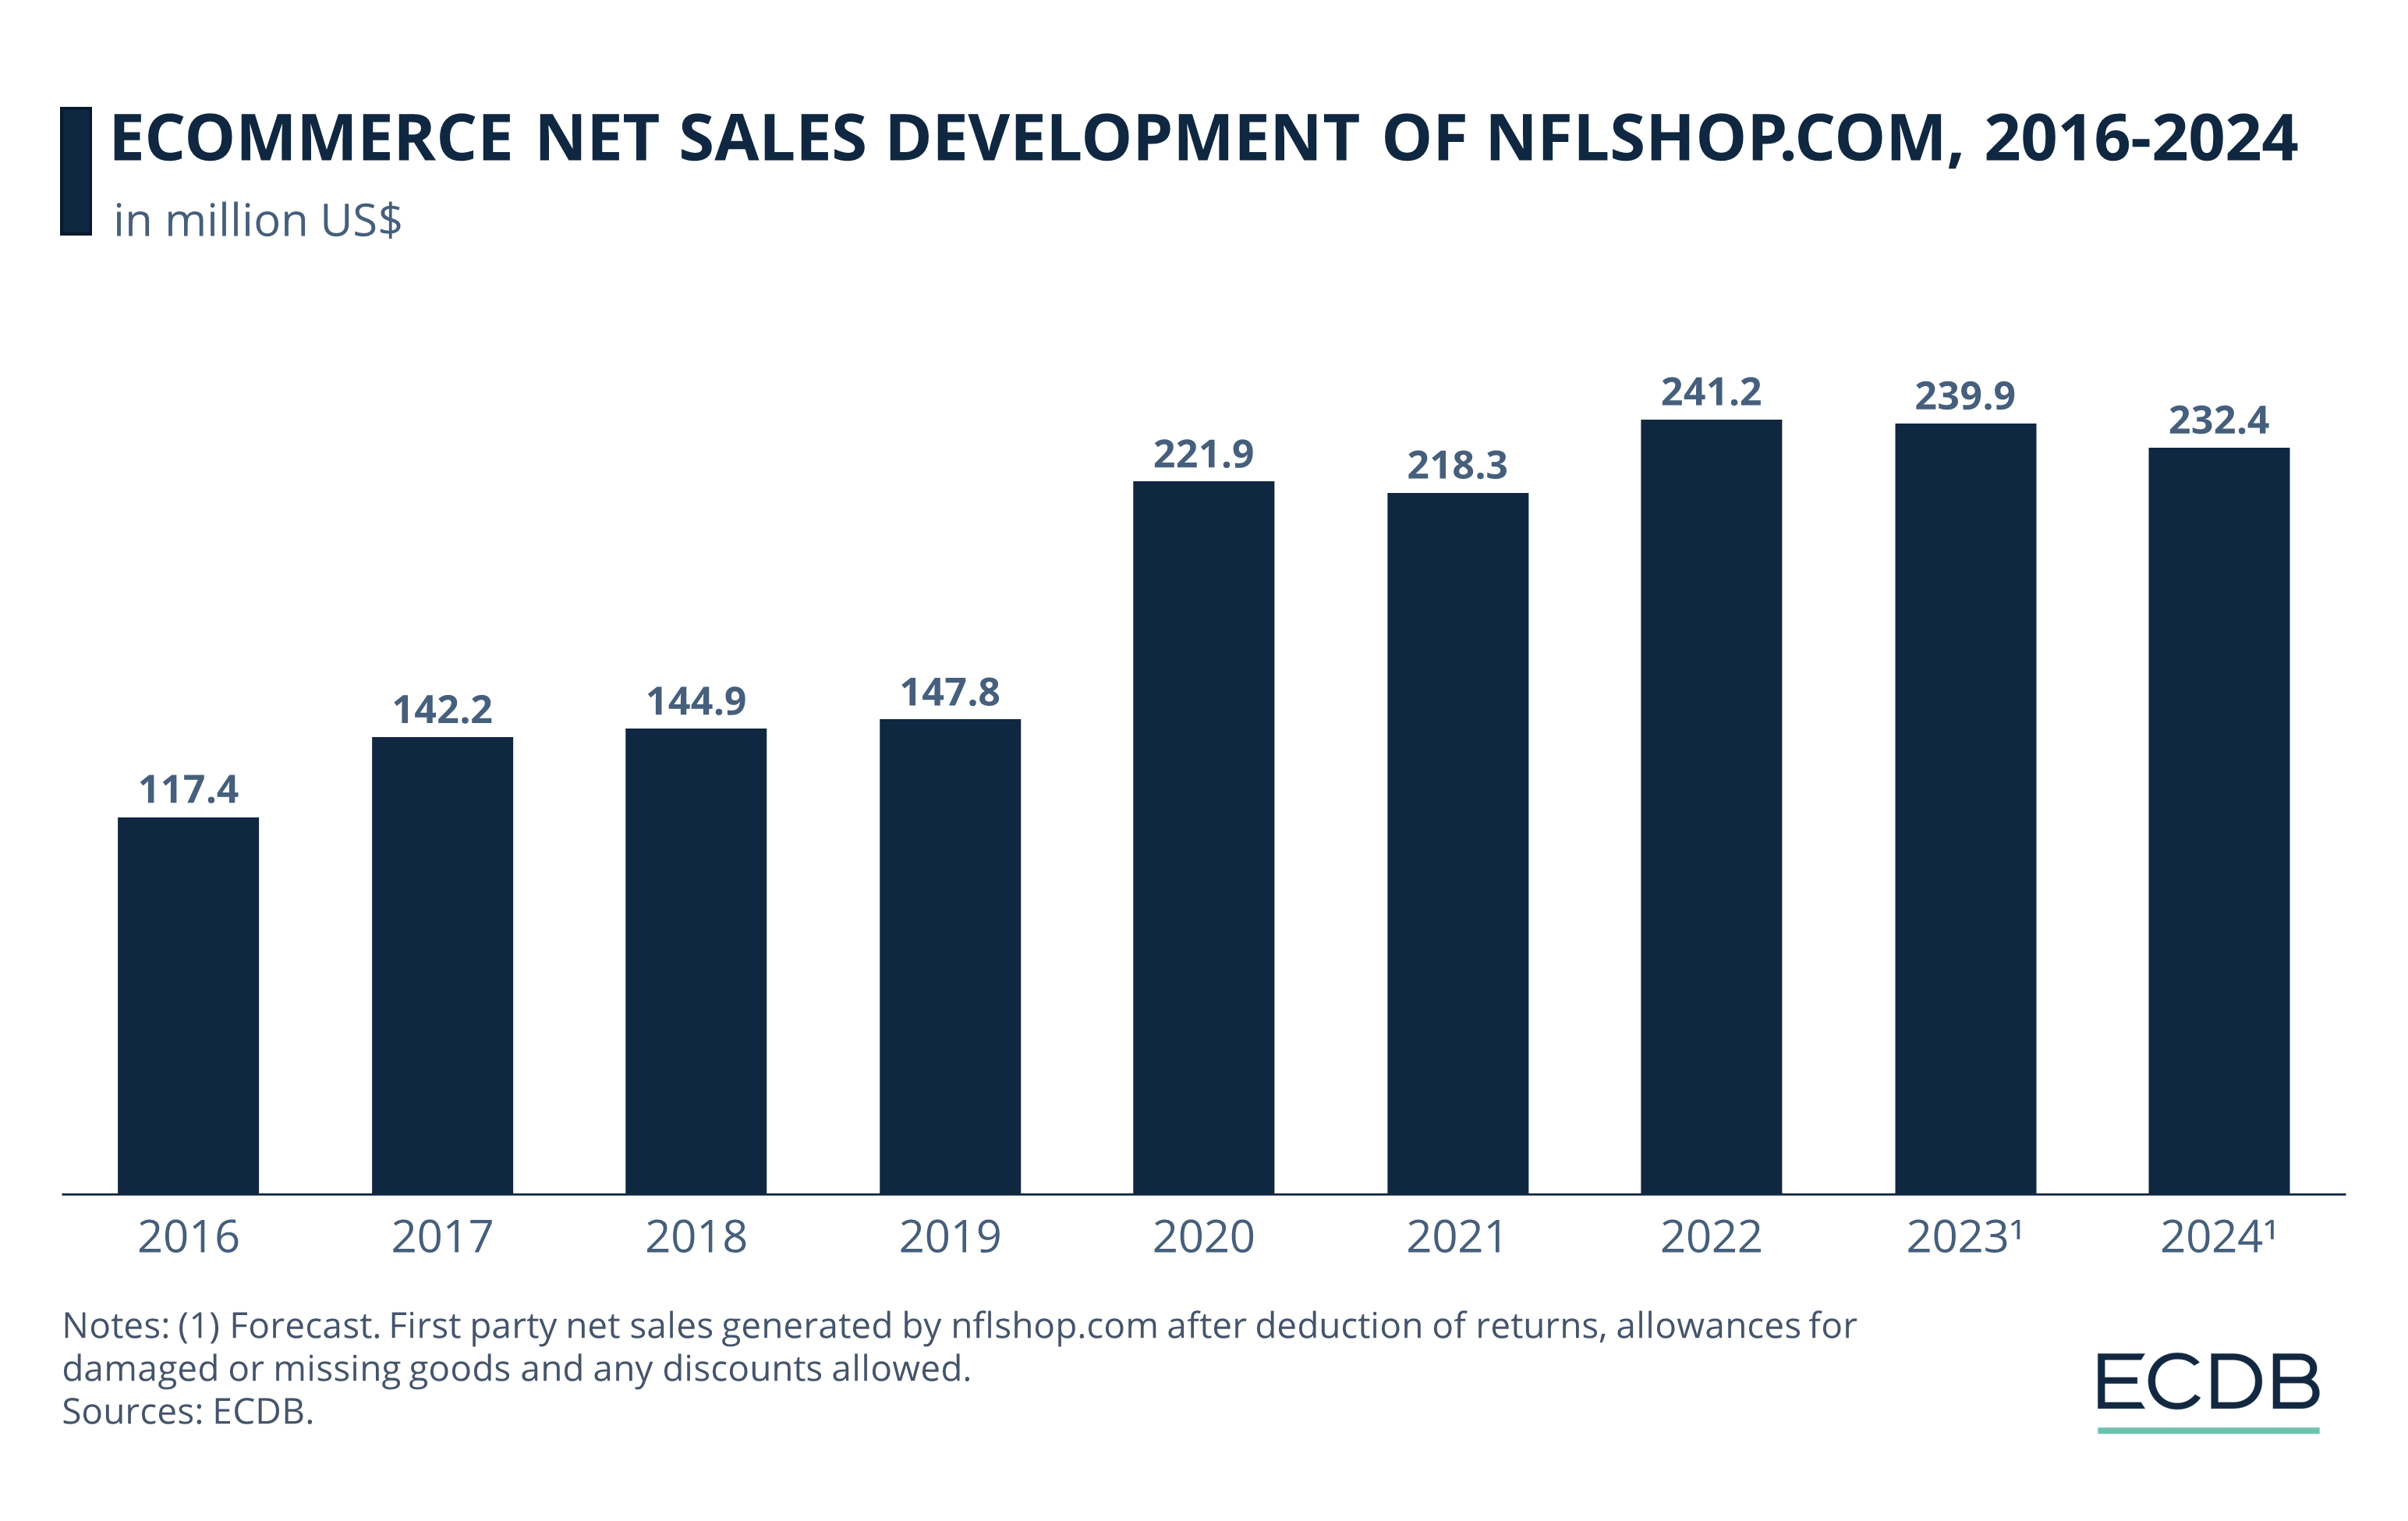 eCommerce Net Sales Development of Nflshop.com, 2016-2024